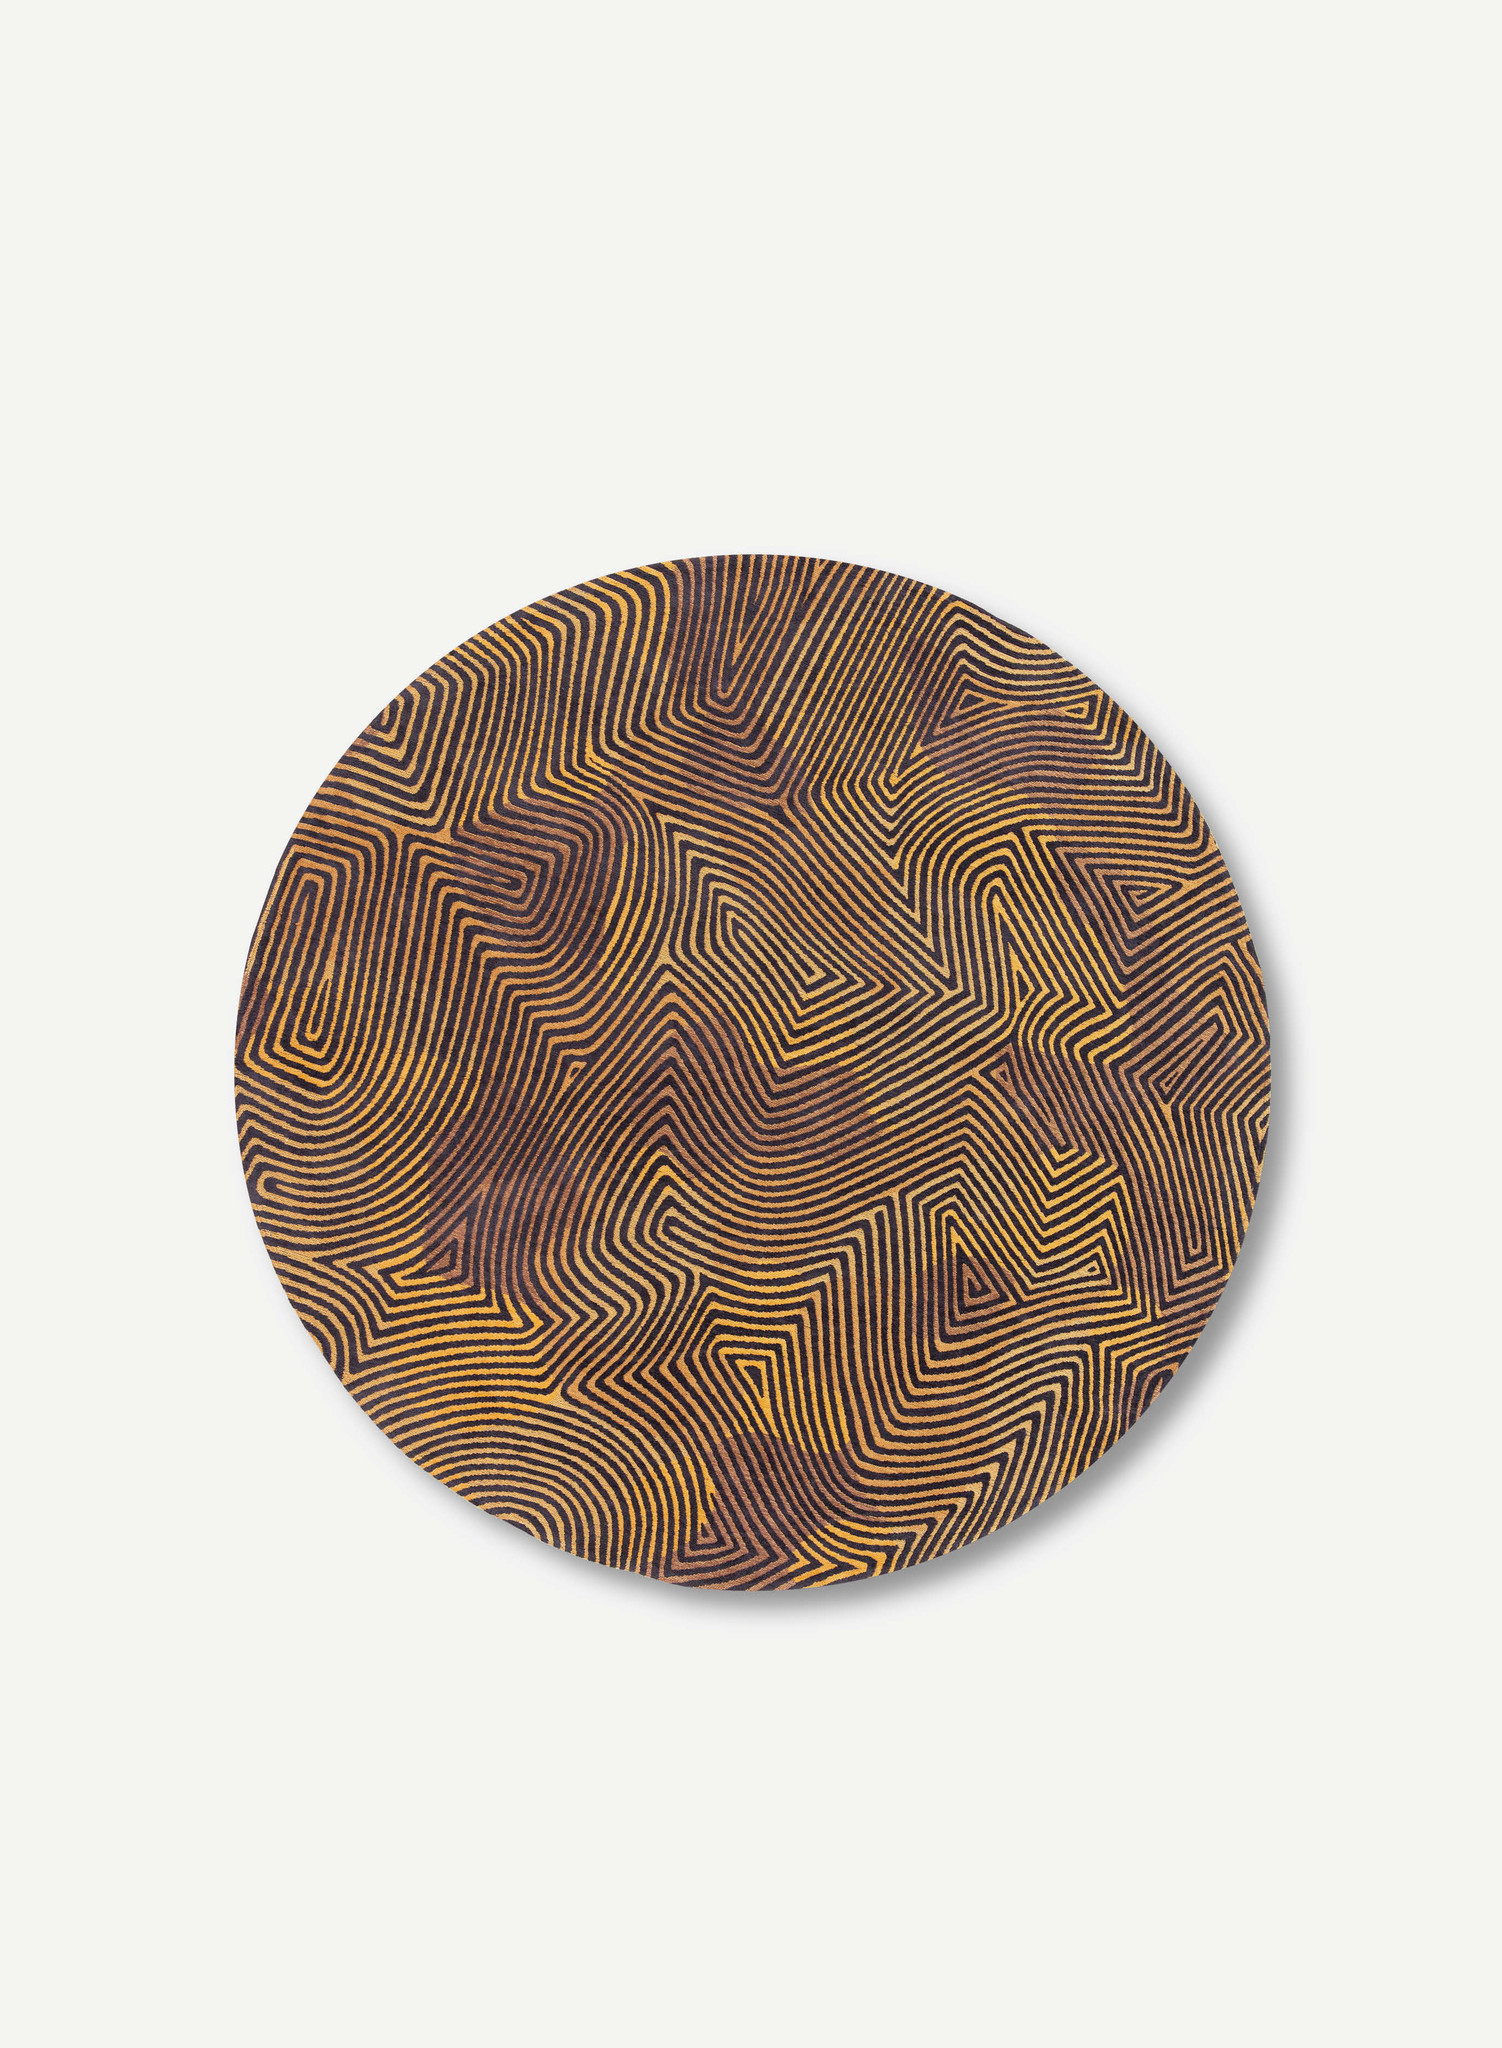 Black Gold Flatwoven Rug ☞ Size: 8' x 11' 2" (240 x 340 cm)